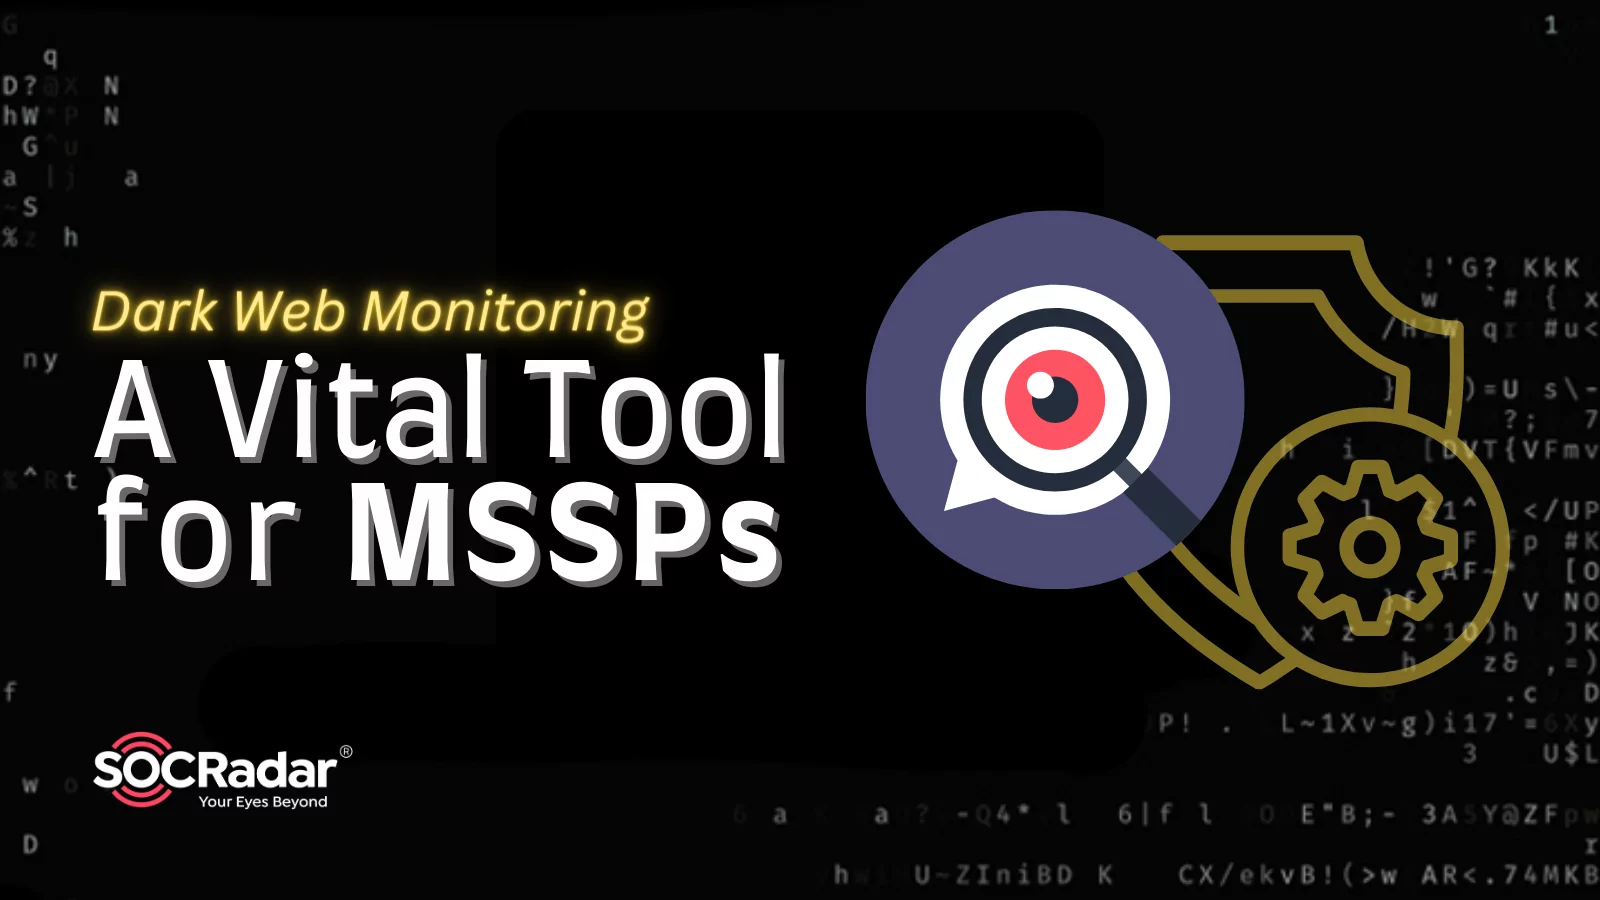 SOCRadar® Cyber Intelligence Inc. | Dark Web Monitoring: A Vital Tool for MSSPs